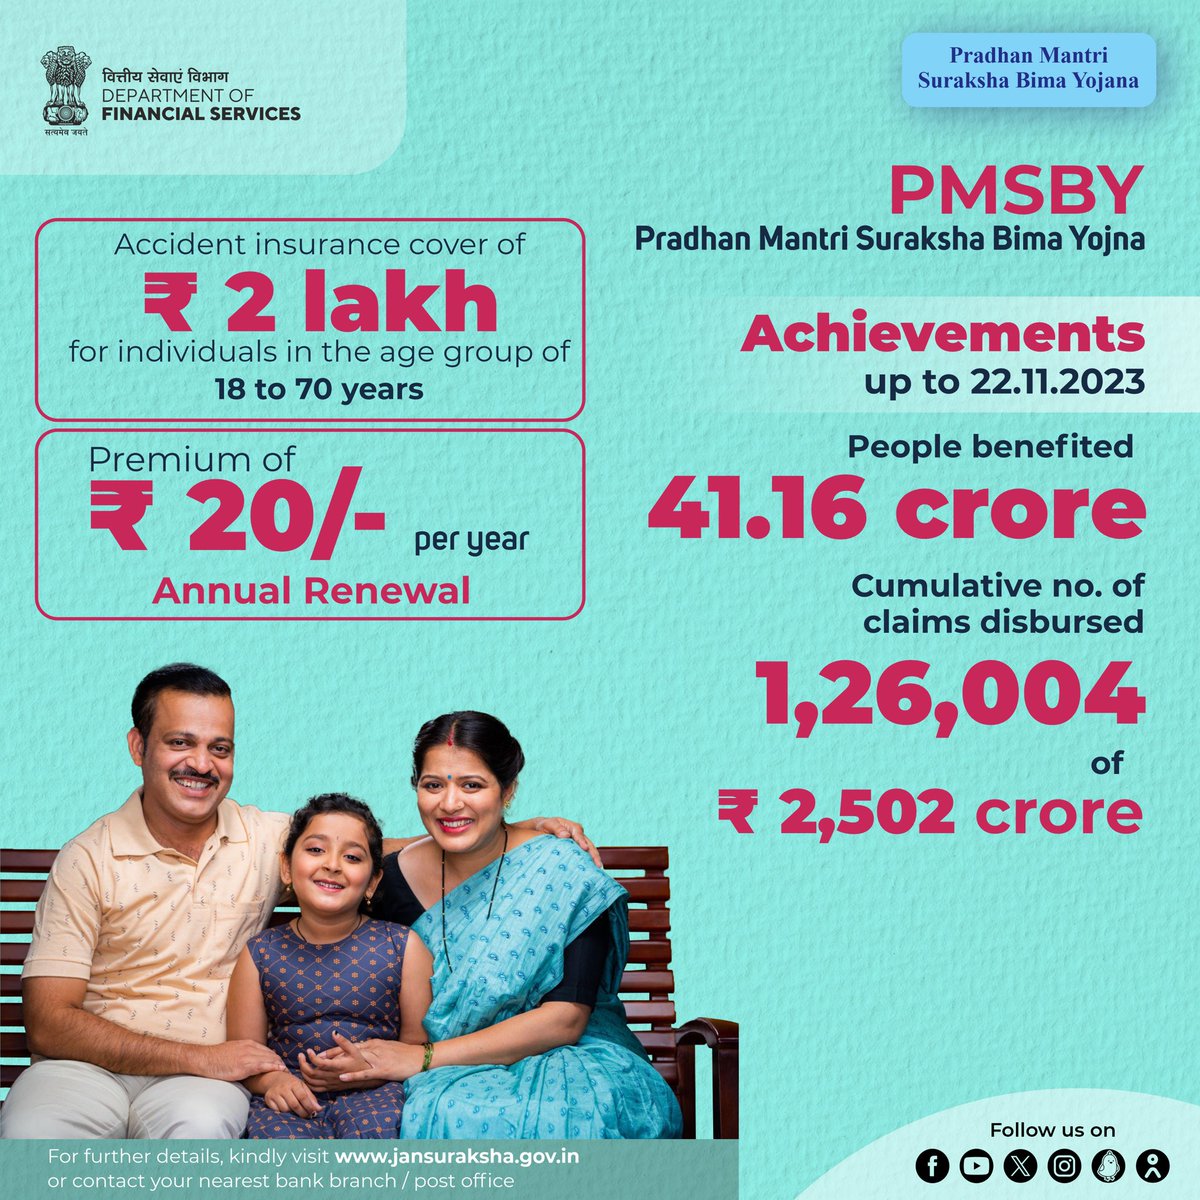 More than 41 crore beneficiaries have benefited from accident insurance worth ₹2 lakh under Pradhan Mantri Suraksha Bima Yojana.

#PMSBY 
#JanSuraksha 
#ViksitBharat 
#FinMinReview2023